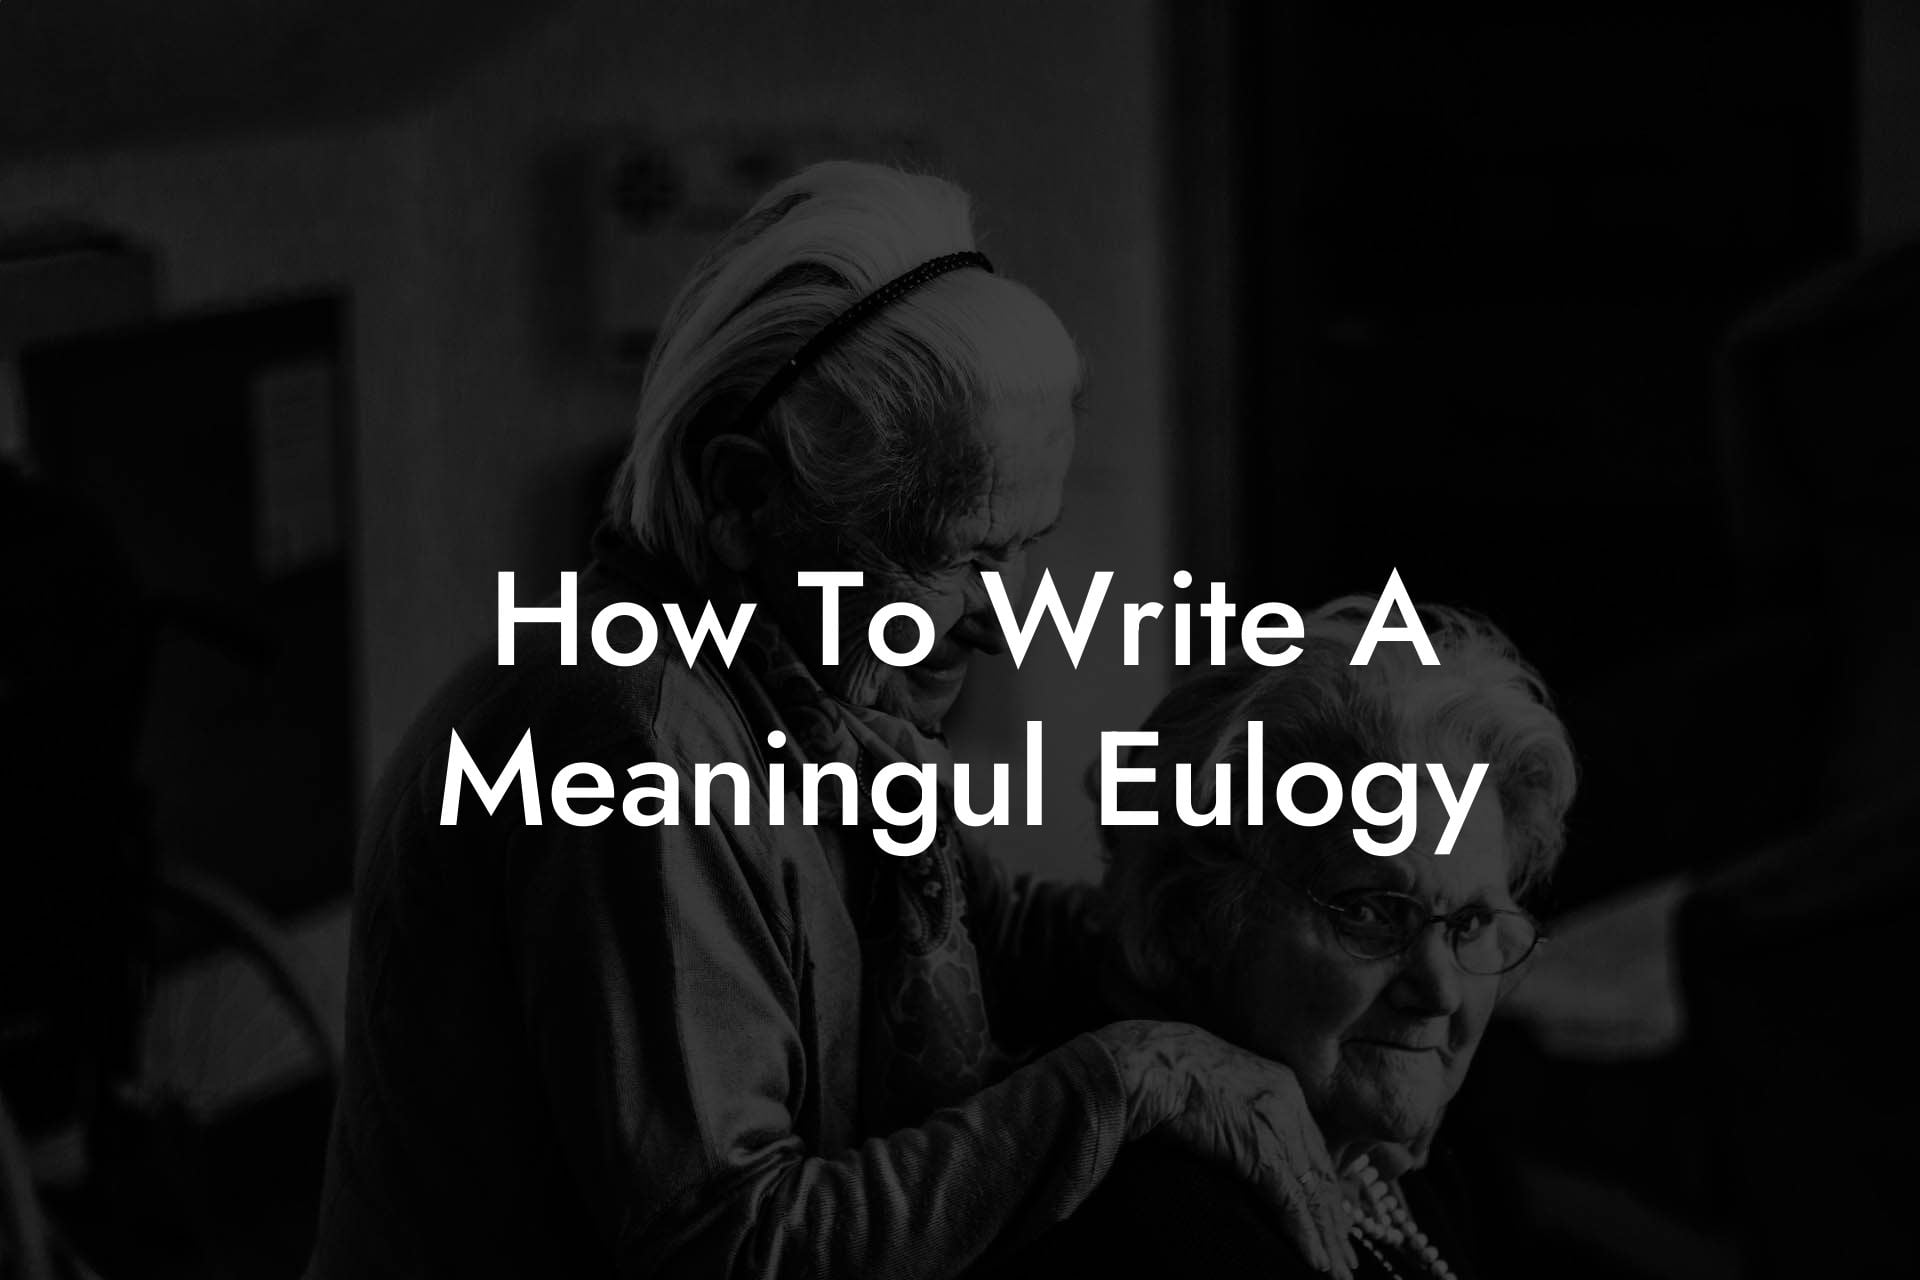 How To Write A Meaningul Eulogy